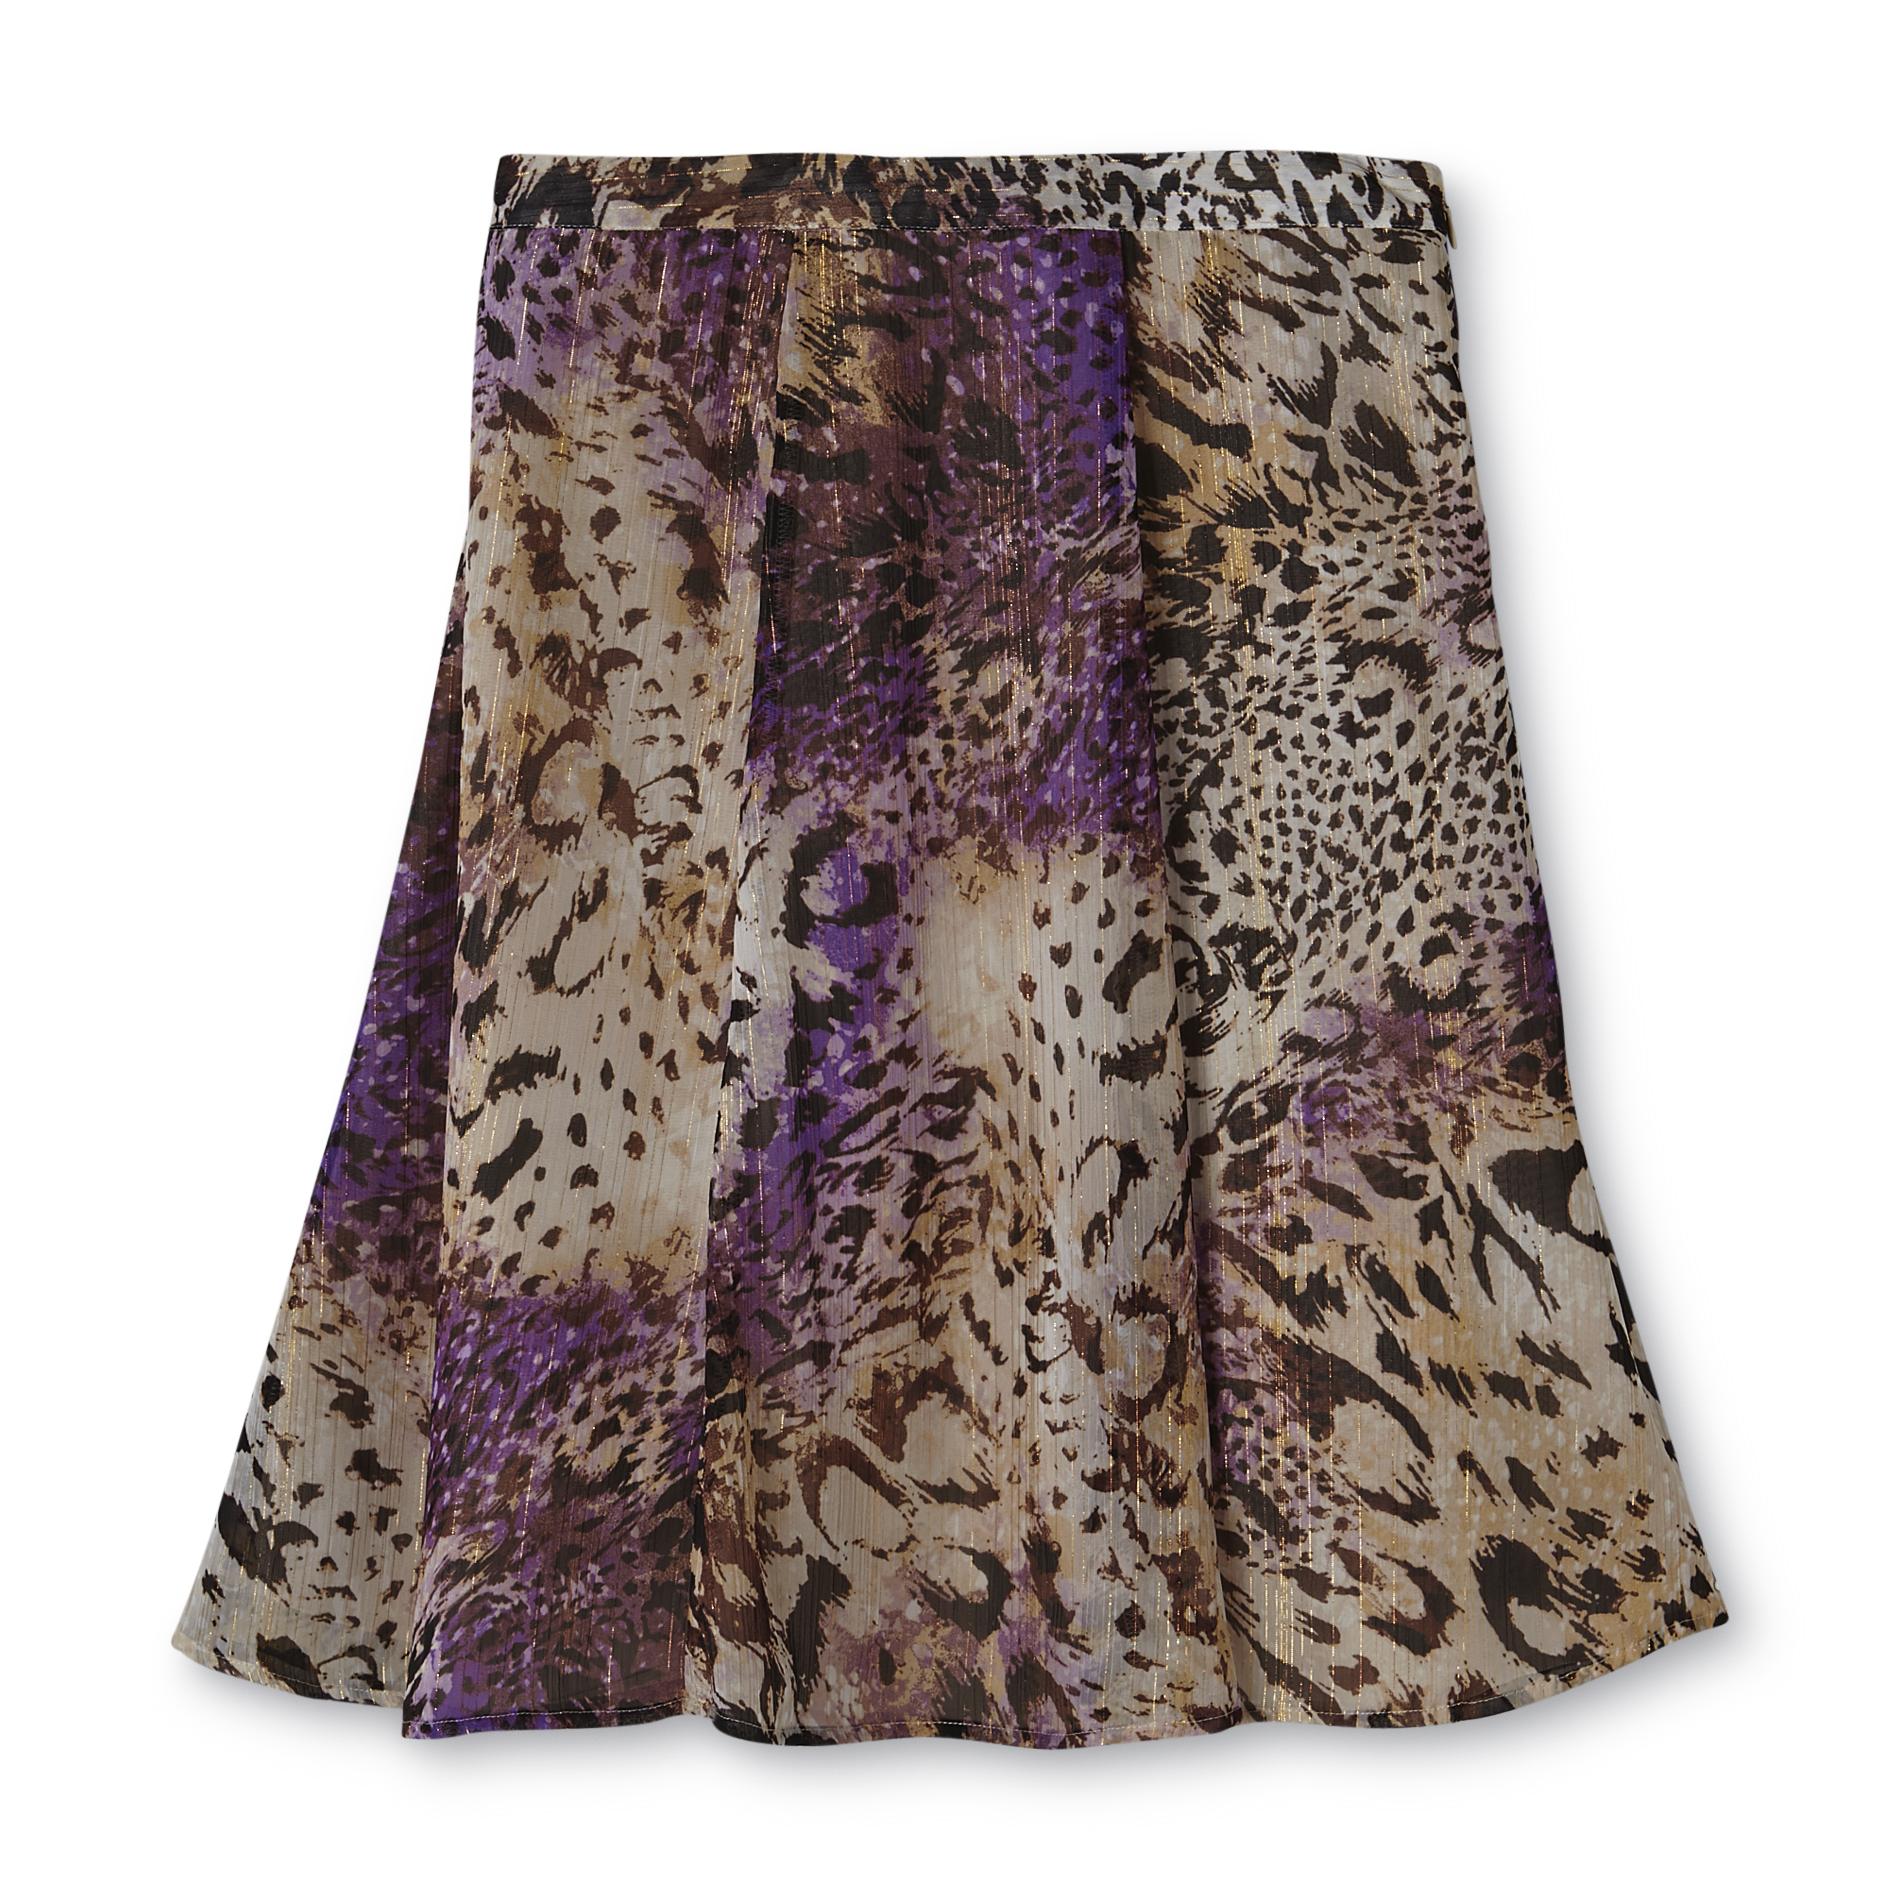 Jaclyn Smith Women's Pieced Chiffon Flounce Skirt - Abstract Animal Print